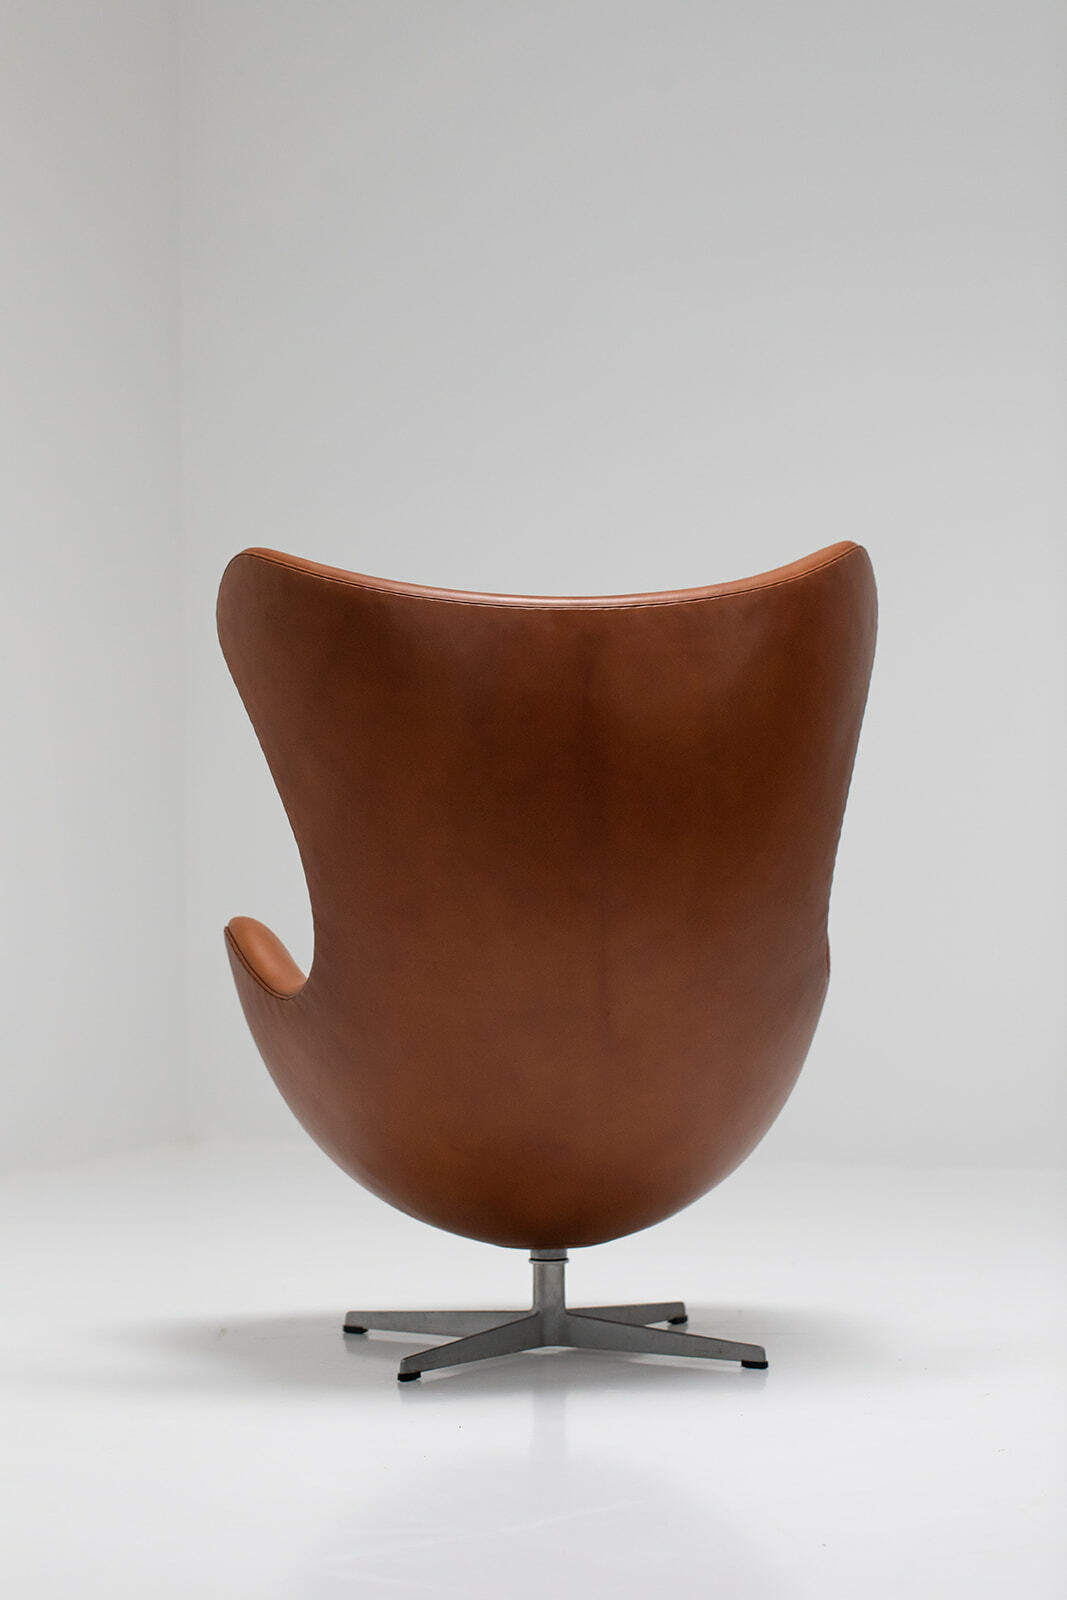 Arne Jacobsen Egg chair and stool